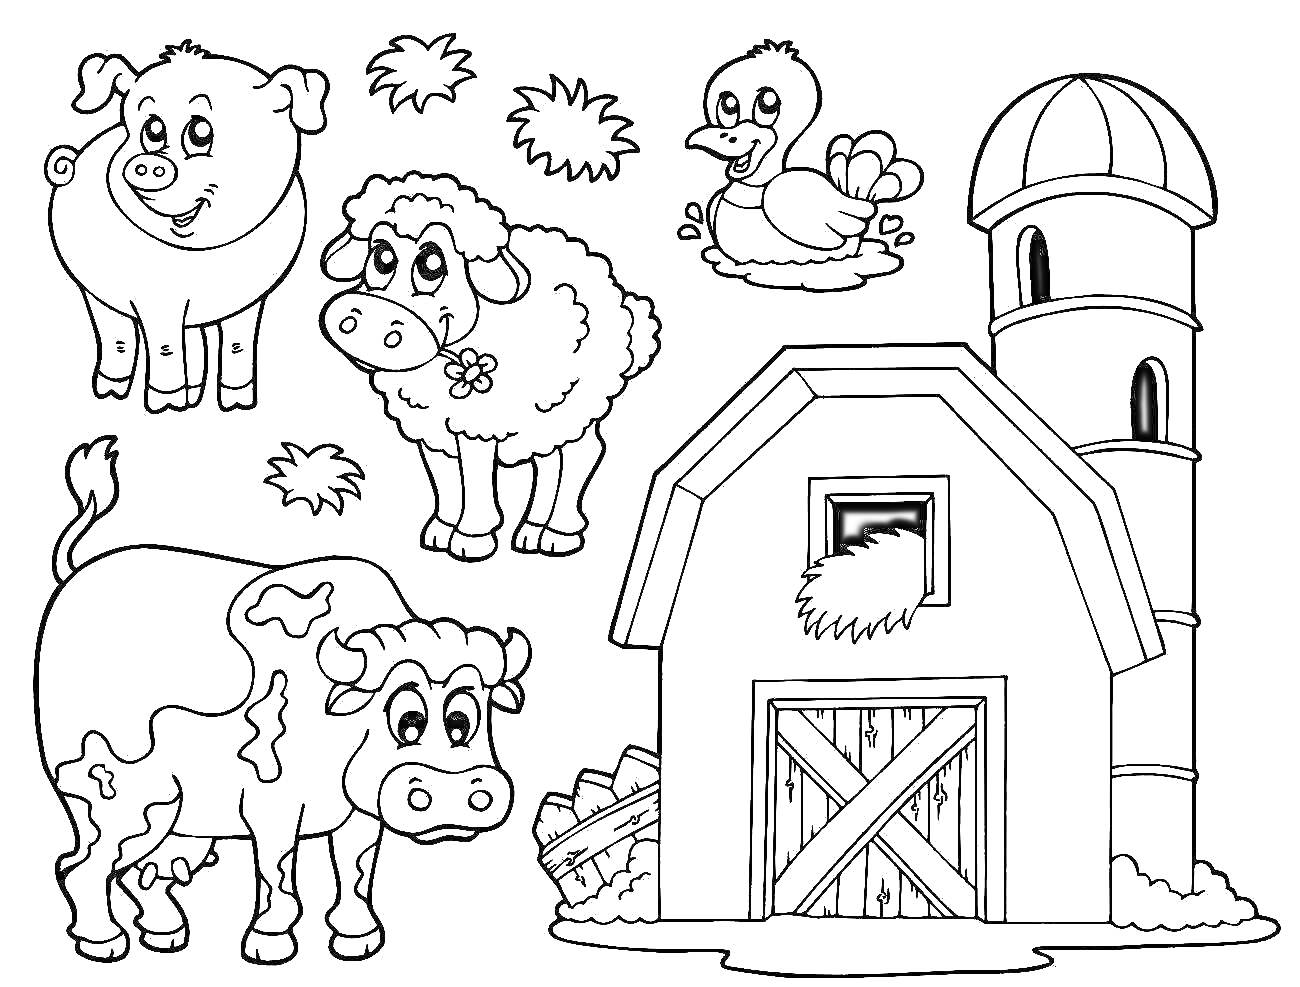 Раскраска На ферме: корова, баран, поросенок, утенок и амбар